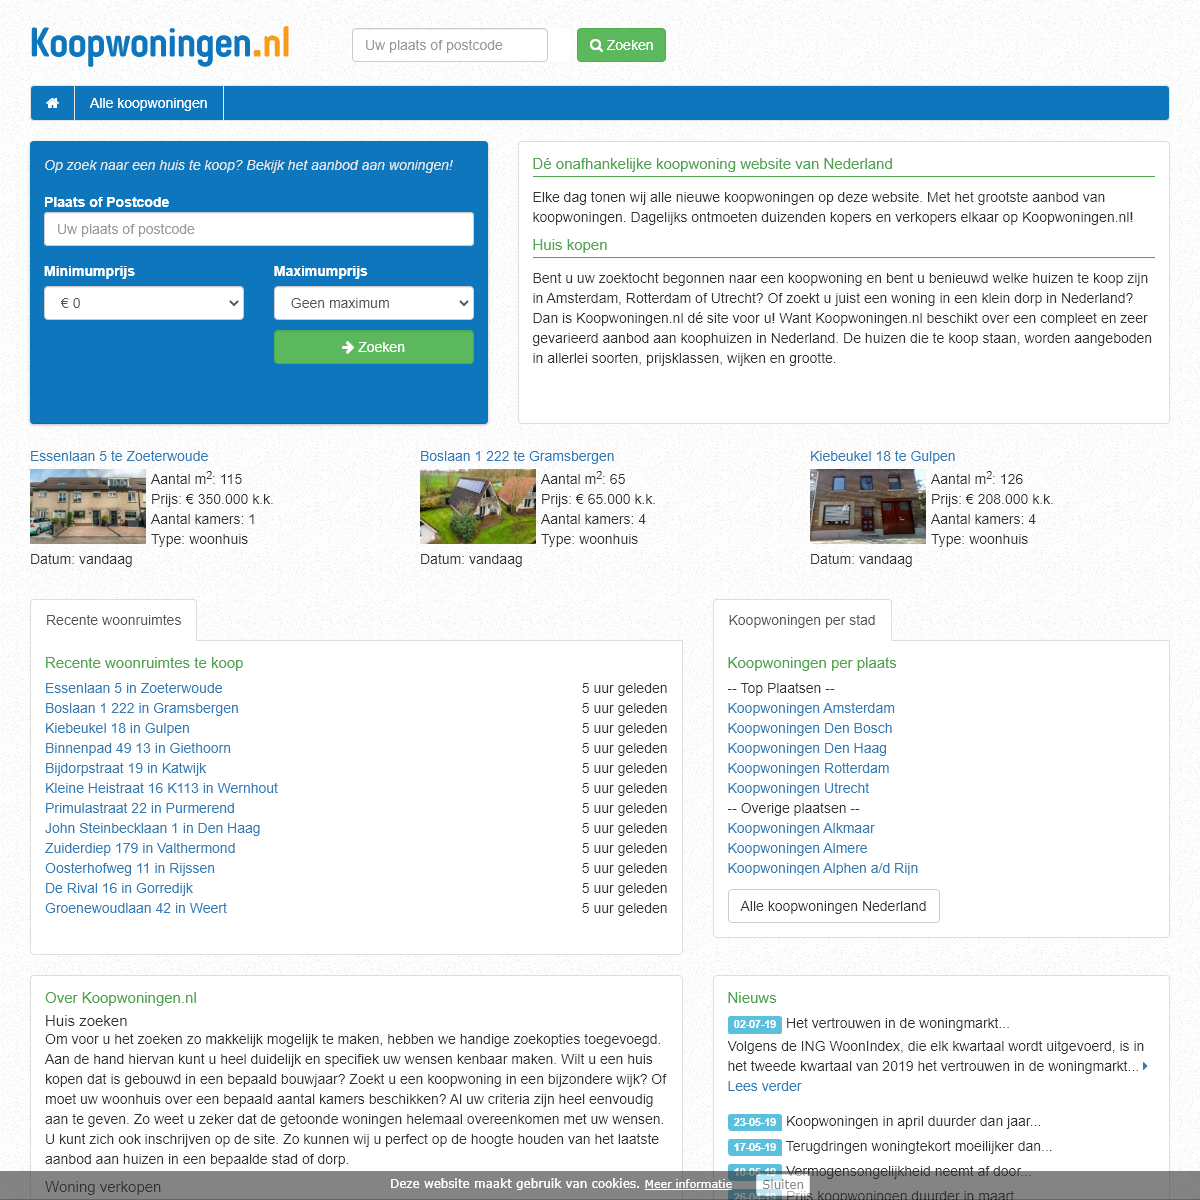 A complete backup of koopwoningen.nl